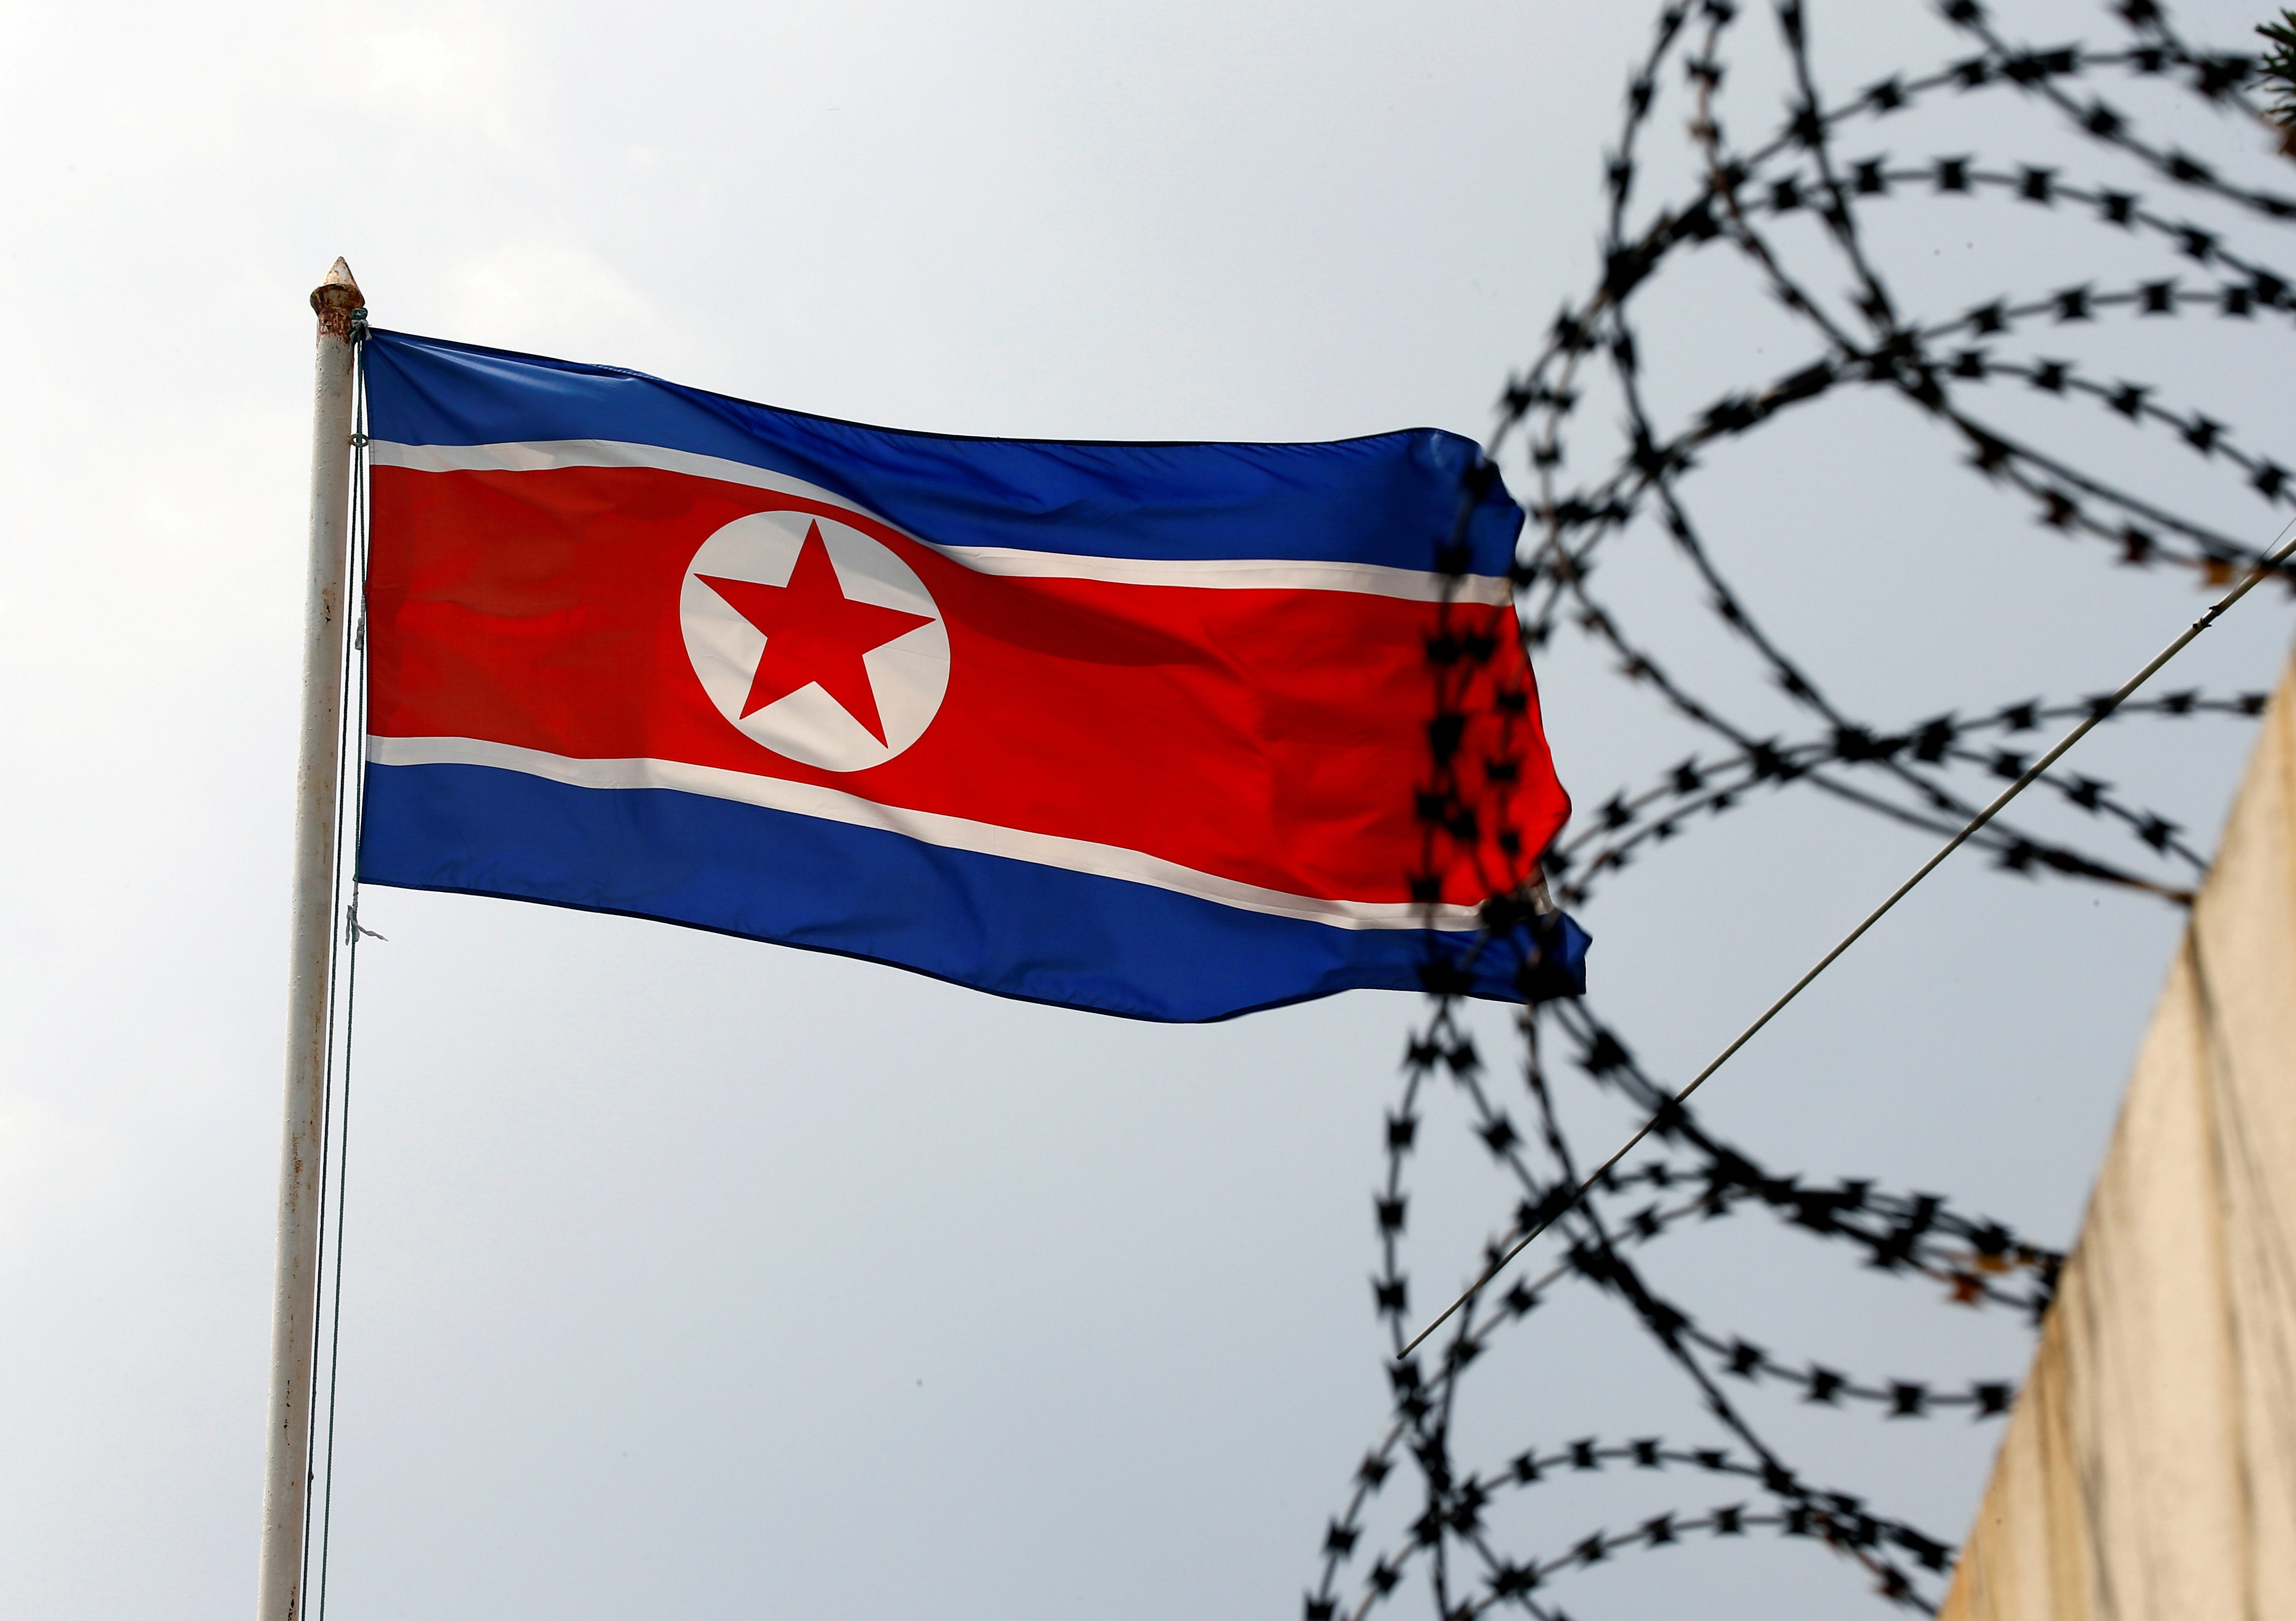 North Korea hackers target S.Korea nuclear think tank – lawmaker